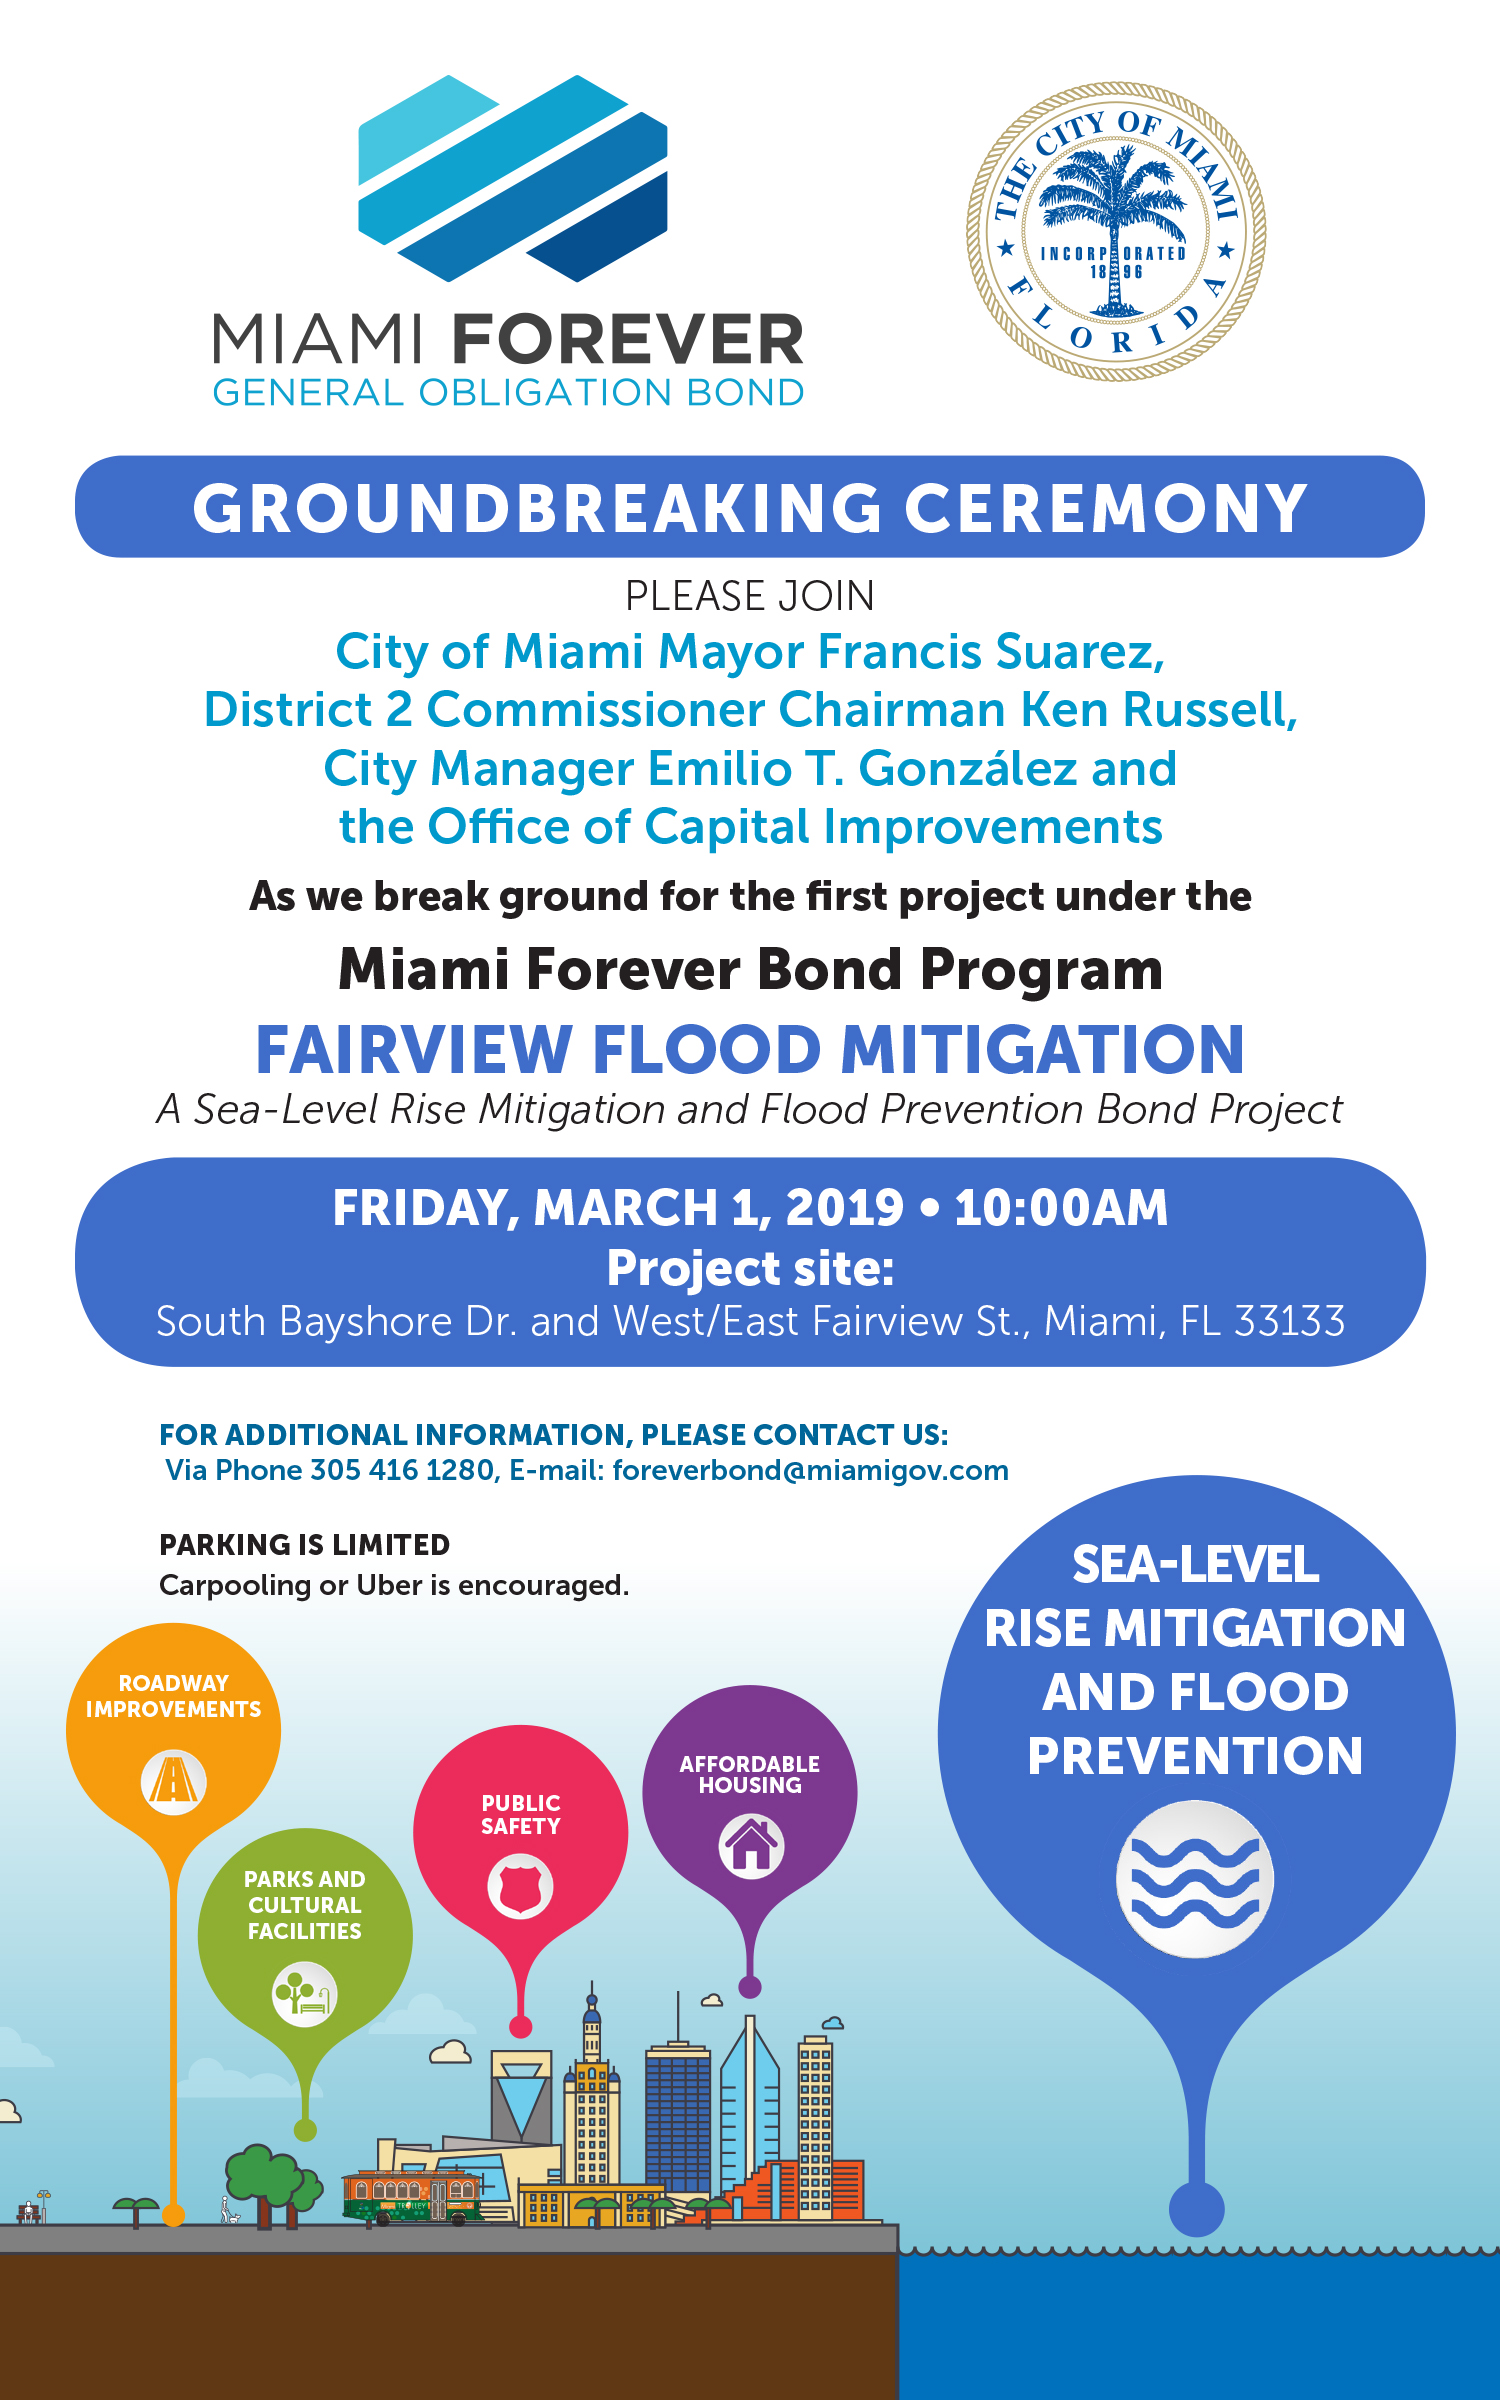 Miami-Forever-Bond-Project-1-Fairview-Flood-Mitigation-Groundbreaking.jpg